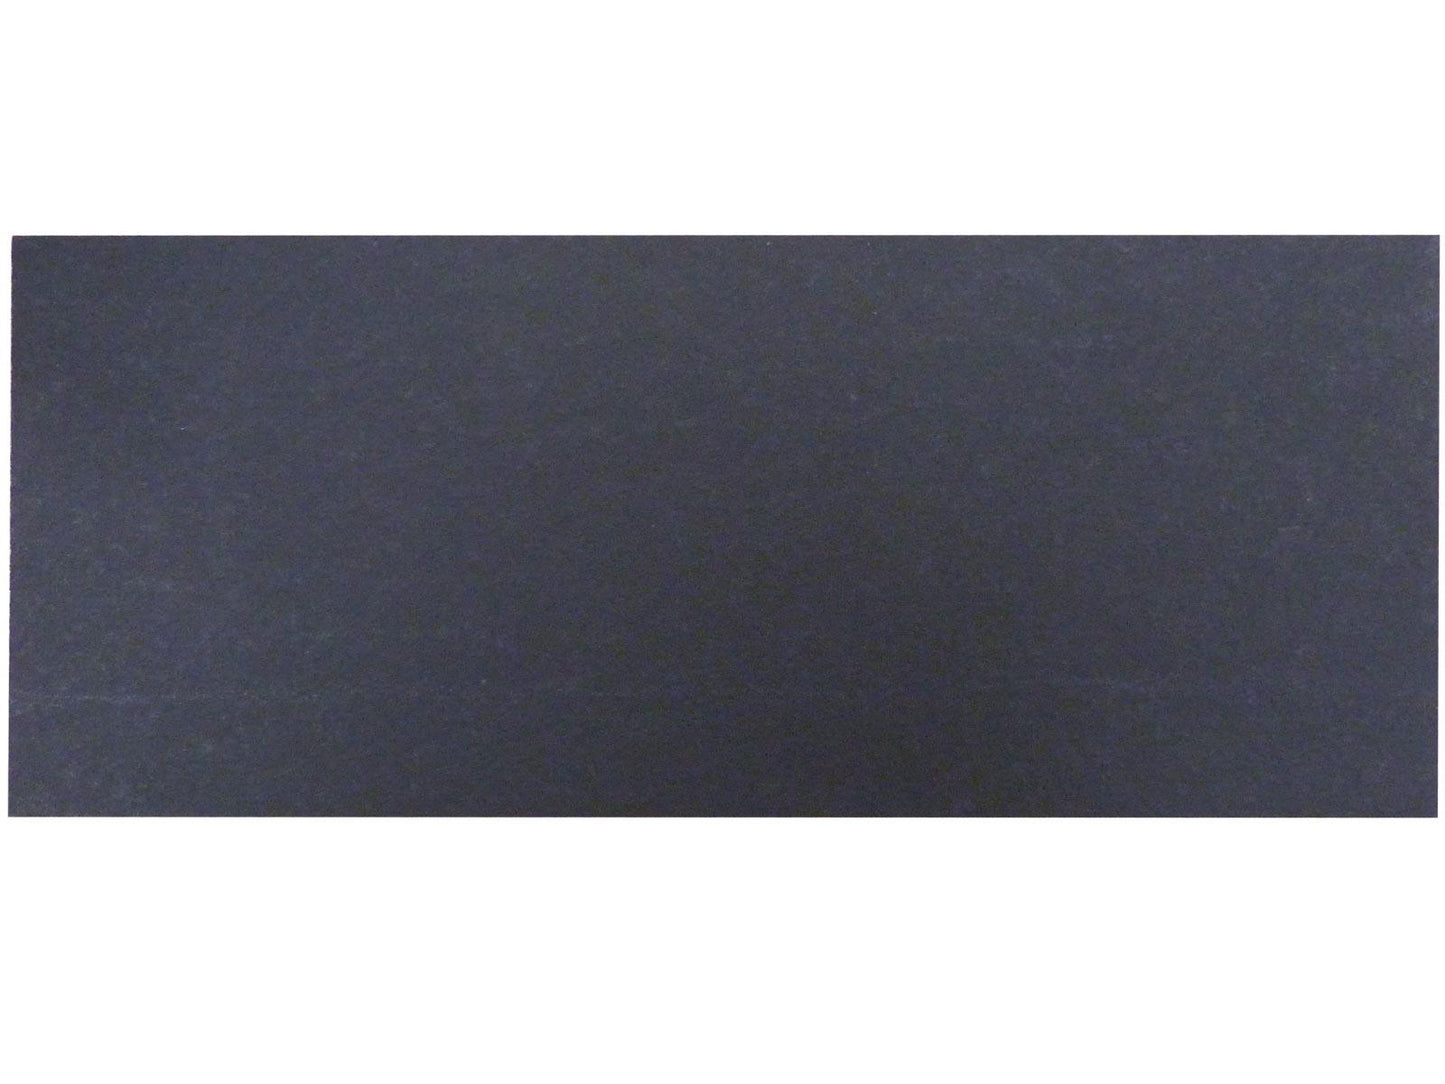 Luthitec Black Plain Fibreboard Headstock Veneer - 250x100x1.6mm (9.8x3.94x0.06")